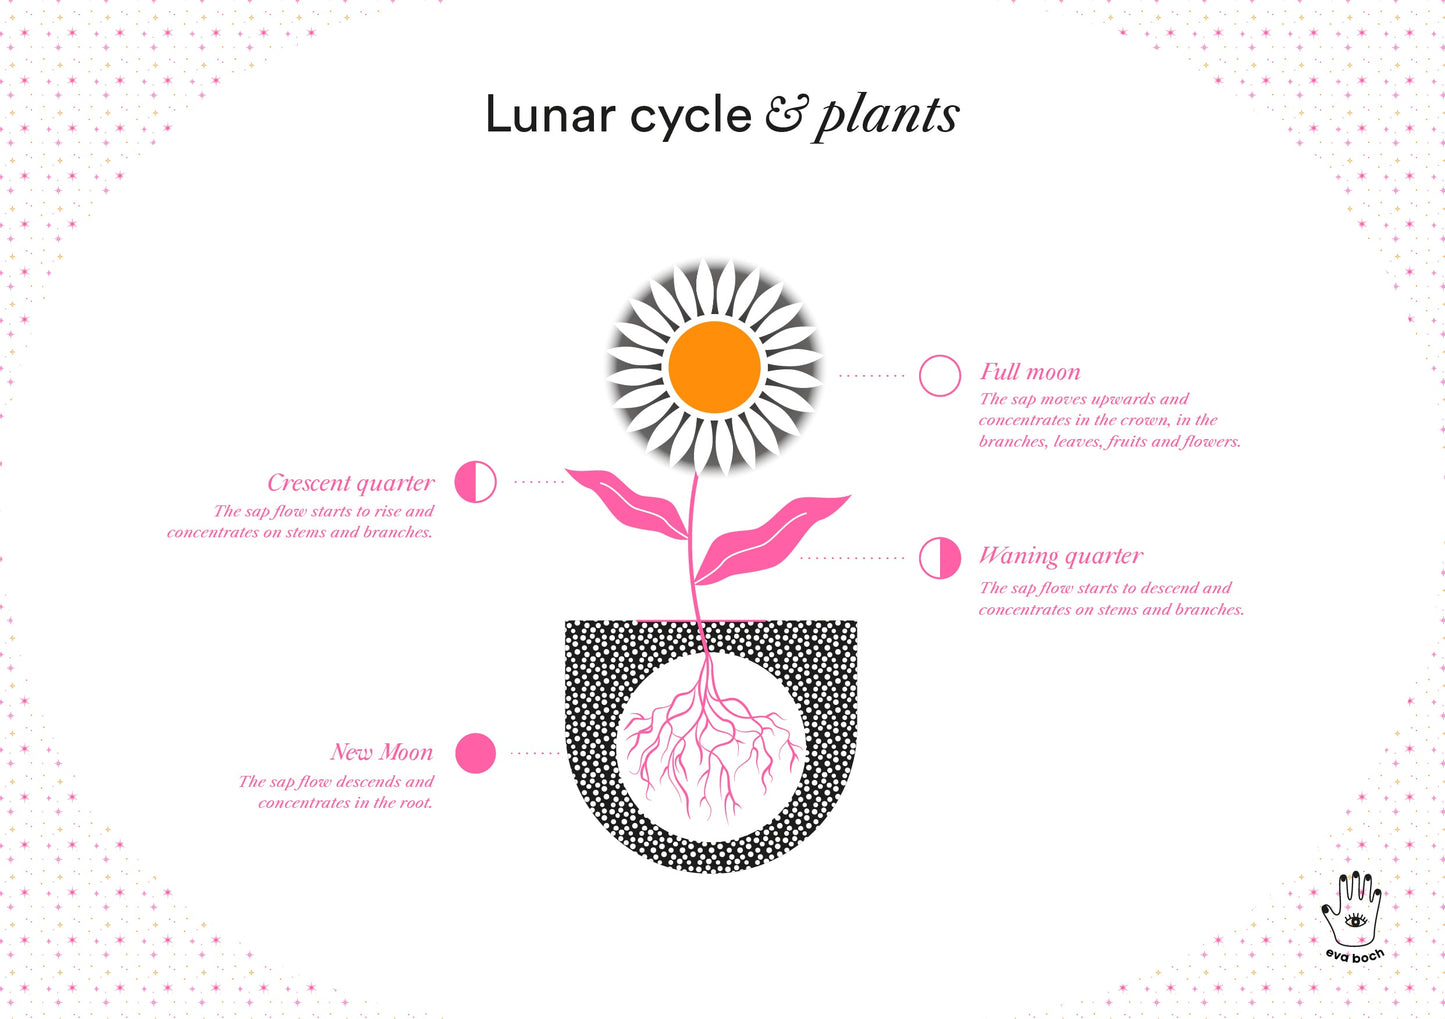 Lunar Cycle & Plants Art Print, Wall Art Print, Poster, Illustration